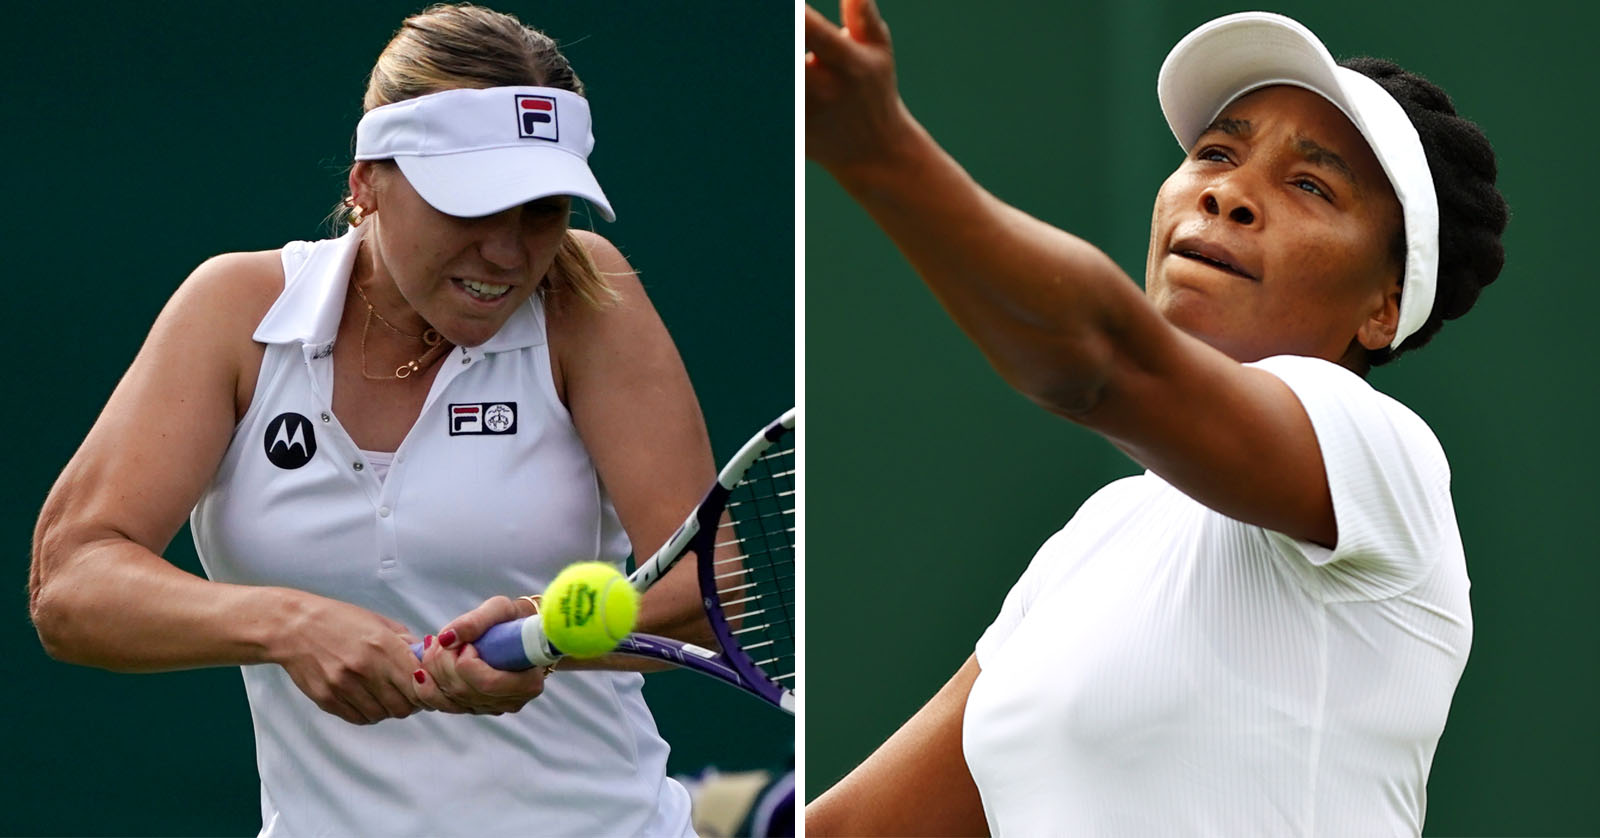 Wimbledon 2021 How to Watch Venus Williams, Sofia Kenin Second Round Matches, Live Stream